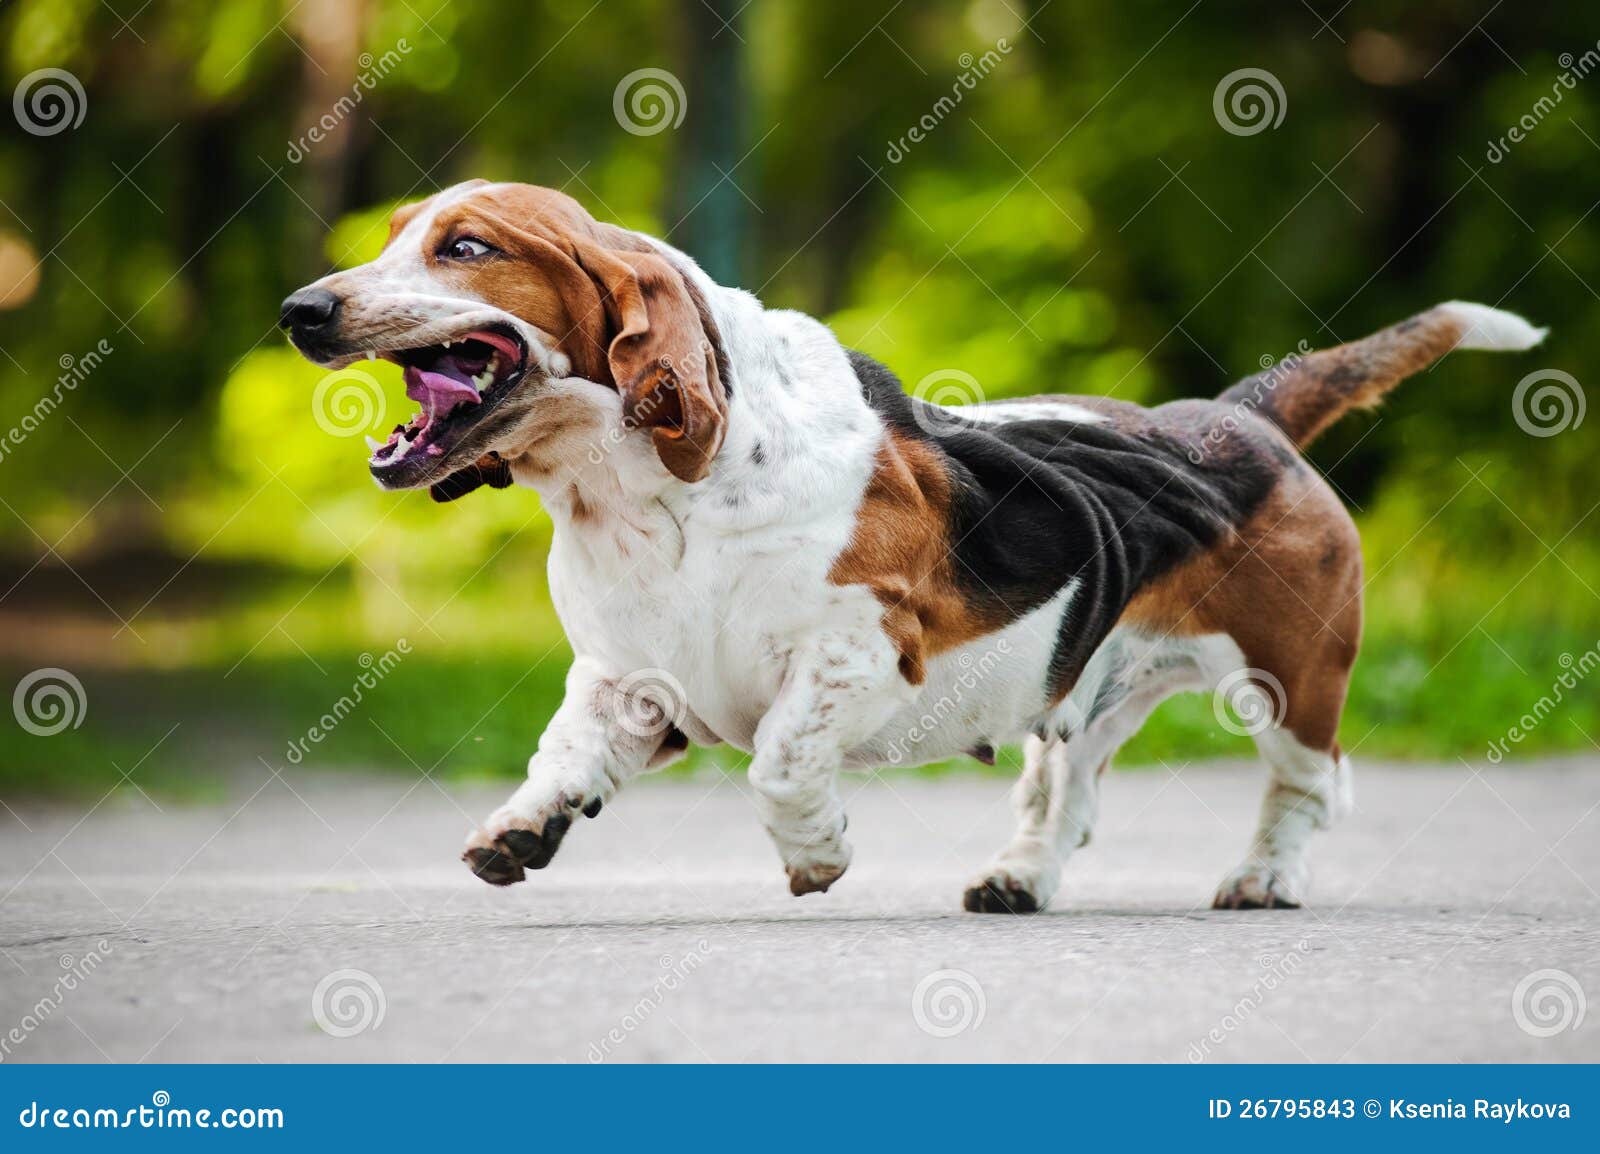 Stock Photos: Funny dog Basset hound running